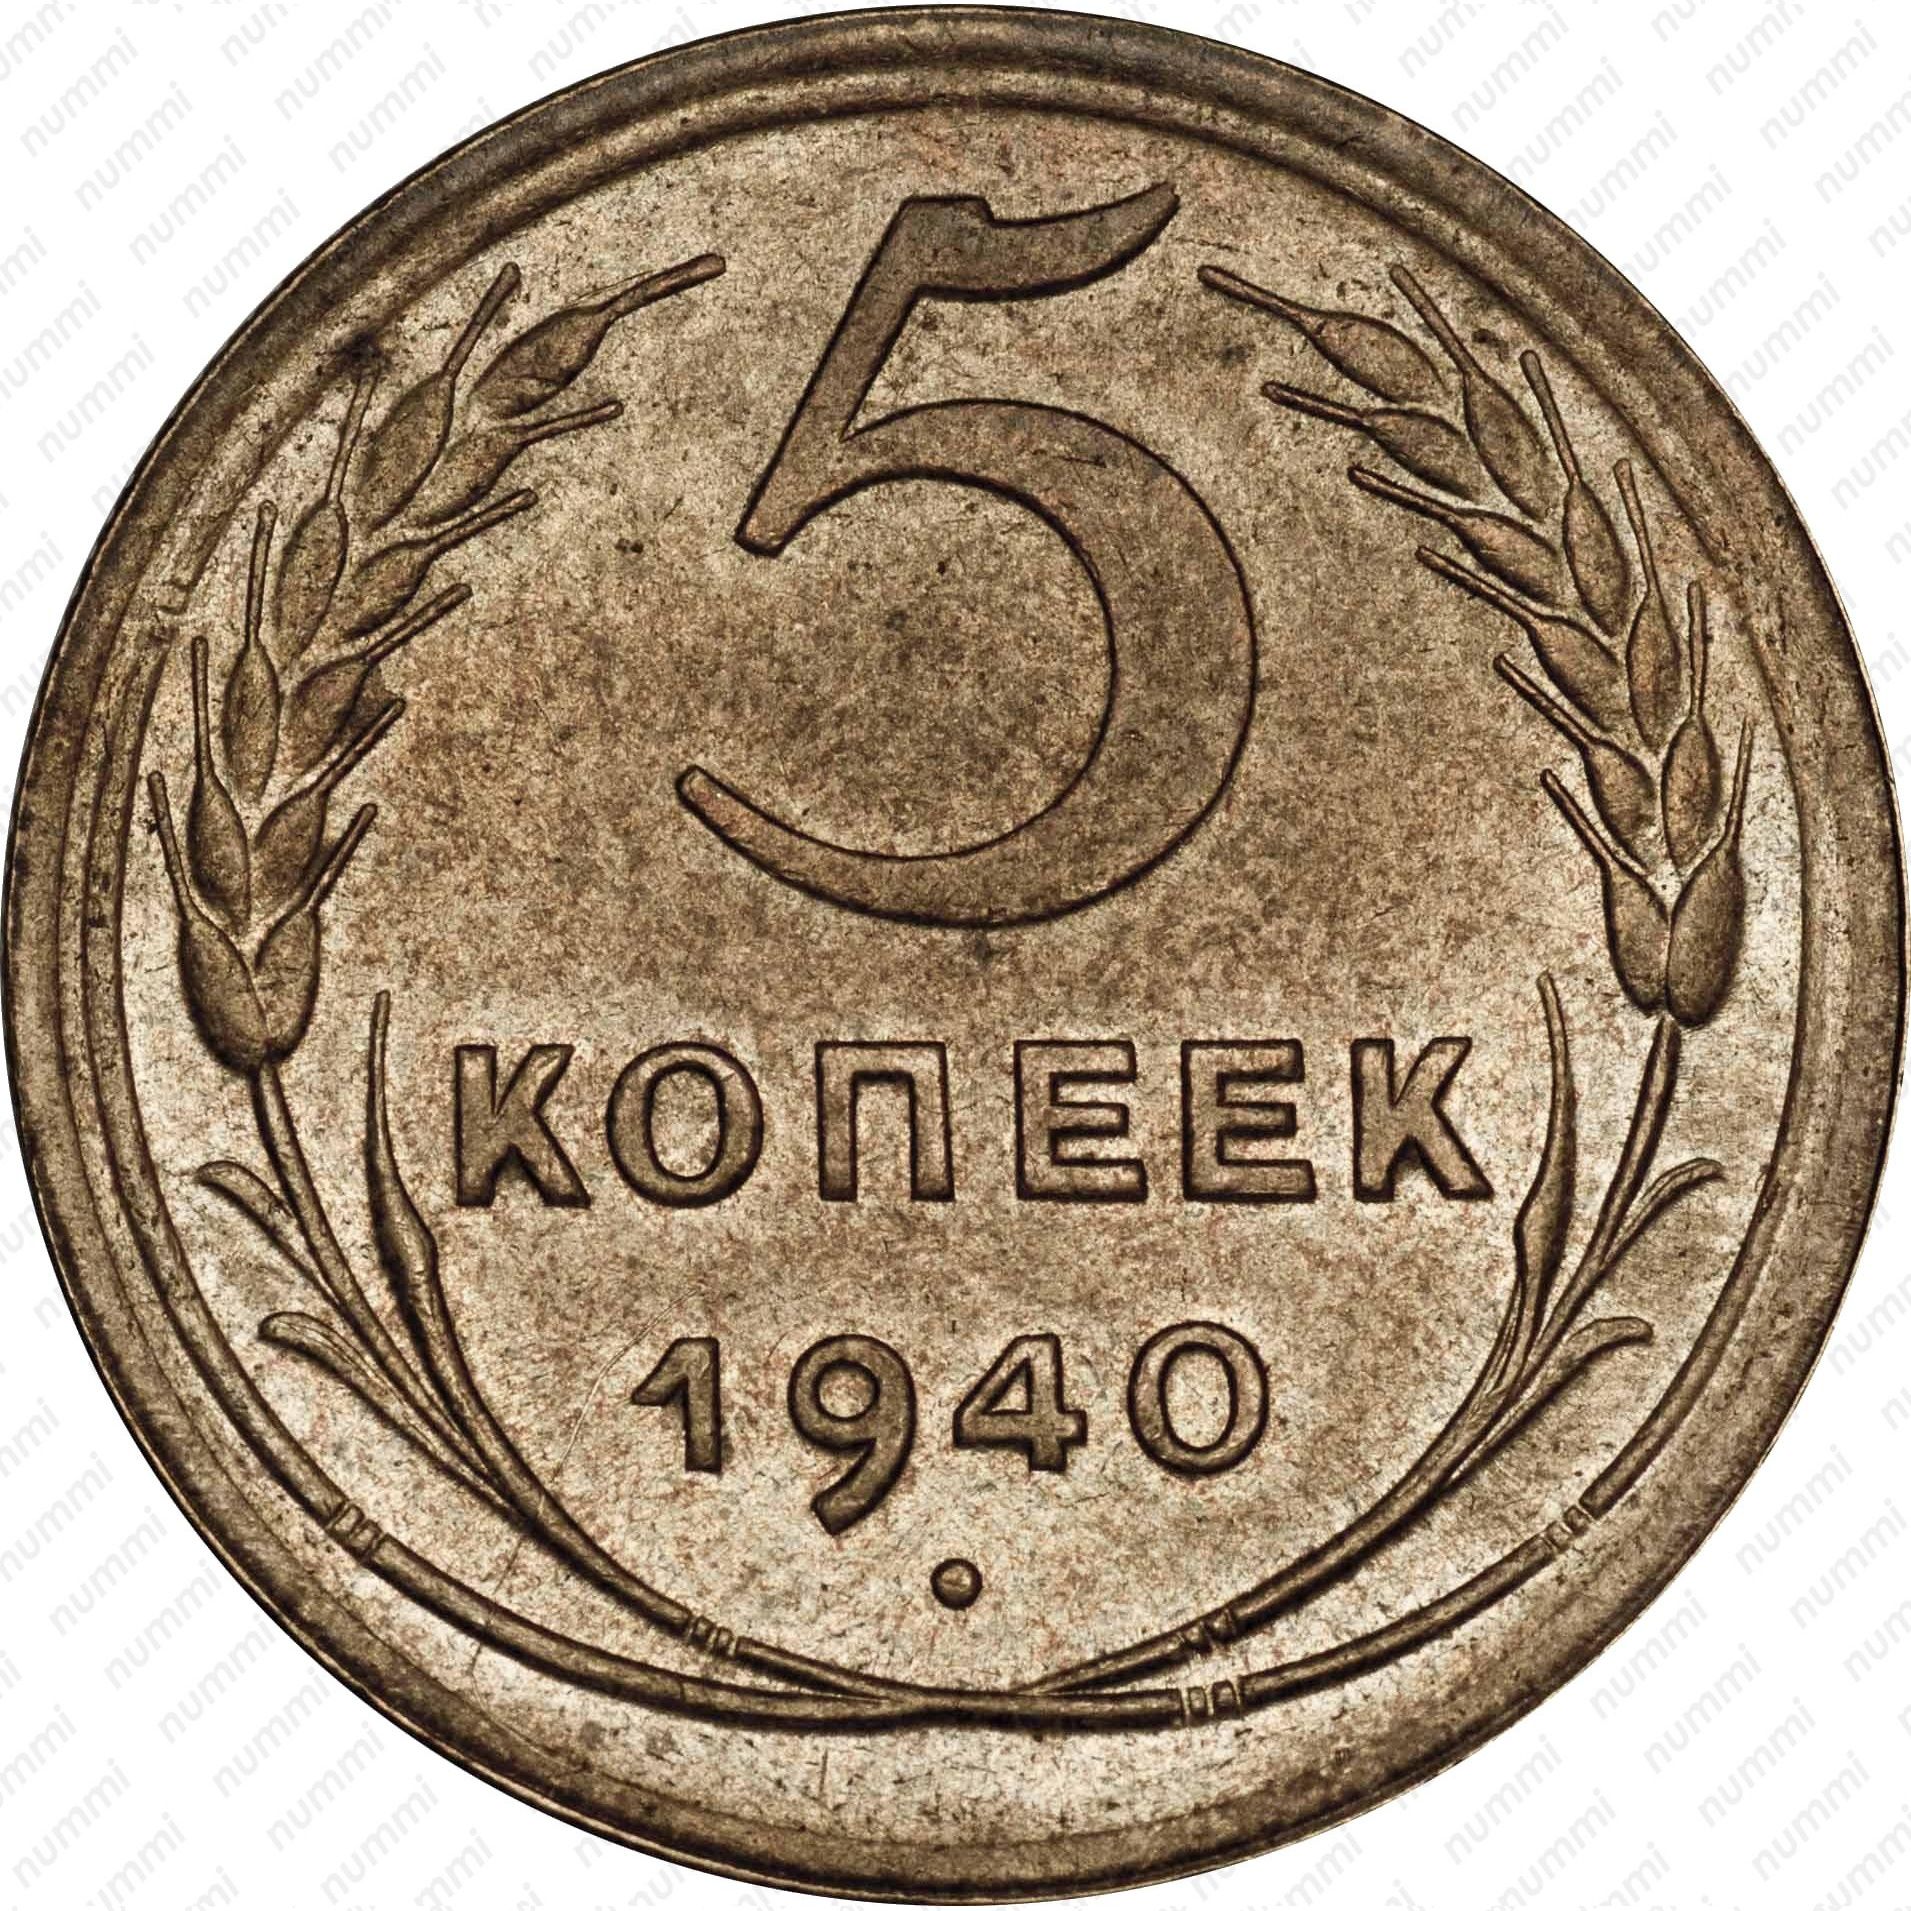 5 копеек 1940 года. Монеты 5 копеек СССР реверс. Монета 5 копеек 1940. Копейка 1940.